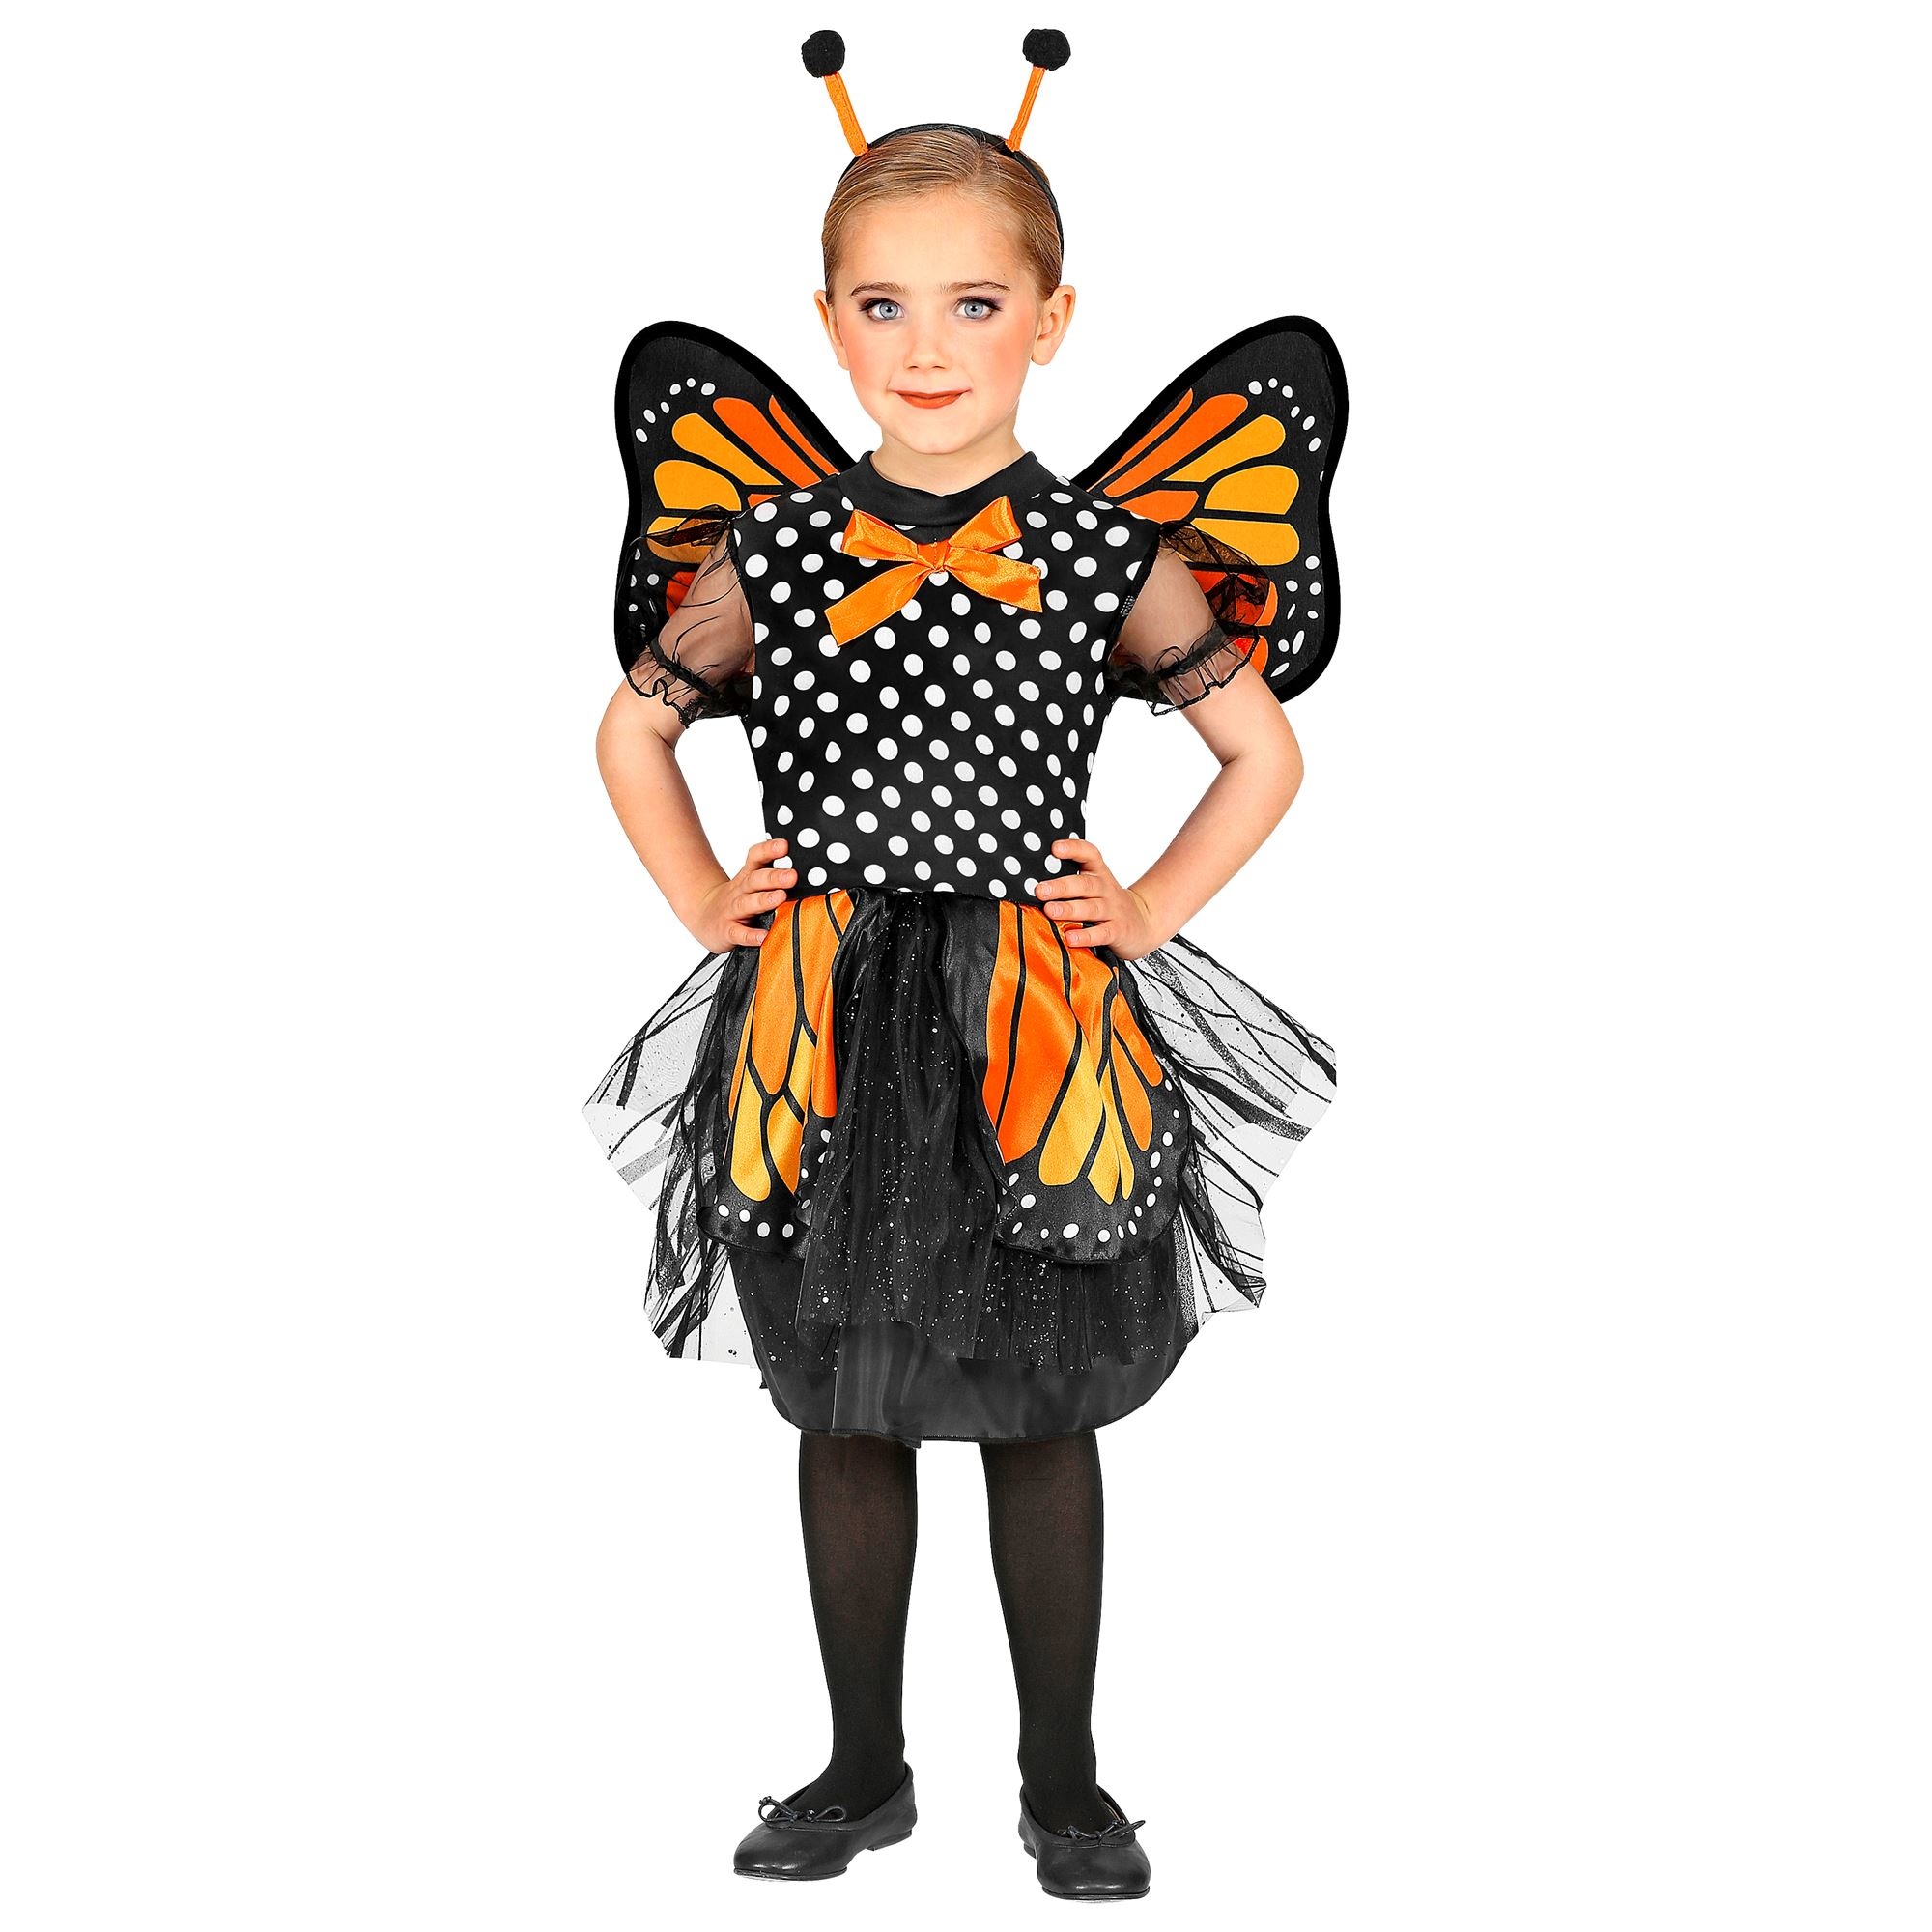 Widmann - Vlinder Kostuum - Magnifieke Monarchvlinder - Meisje - oranje,zwart - Maat 116 - Carnavalskleding - Verkleedkleding